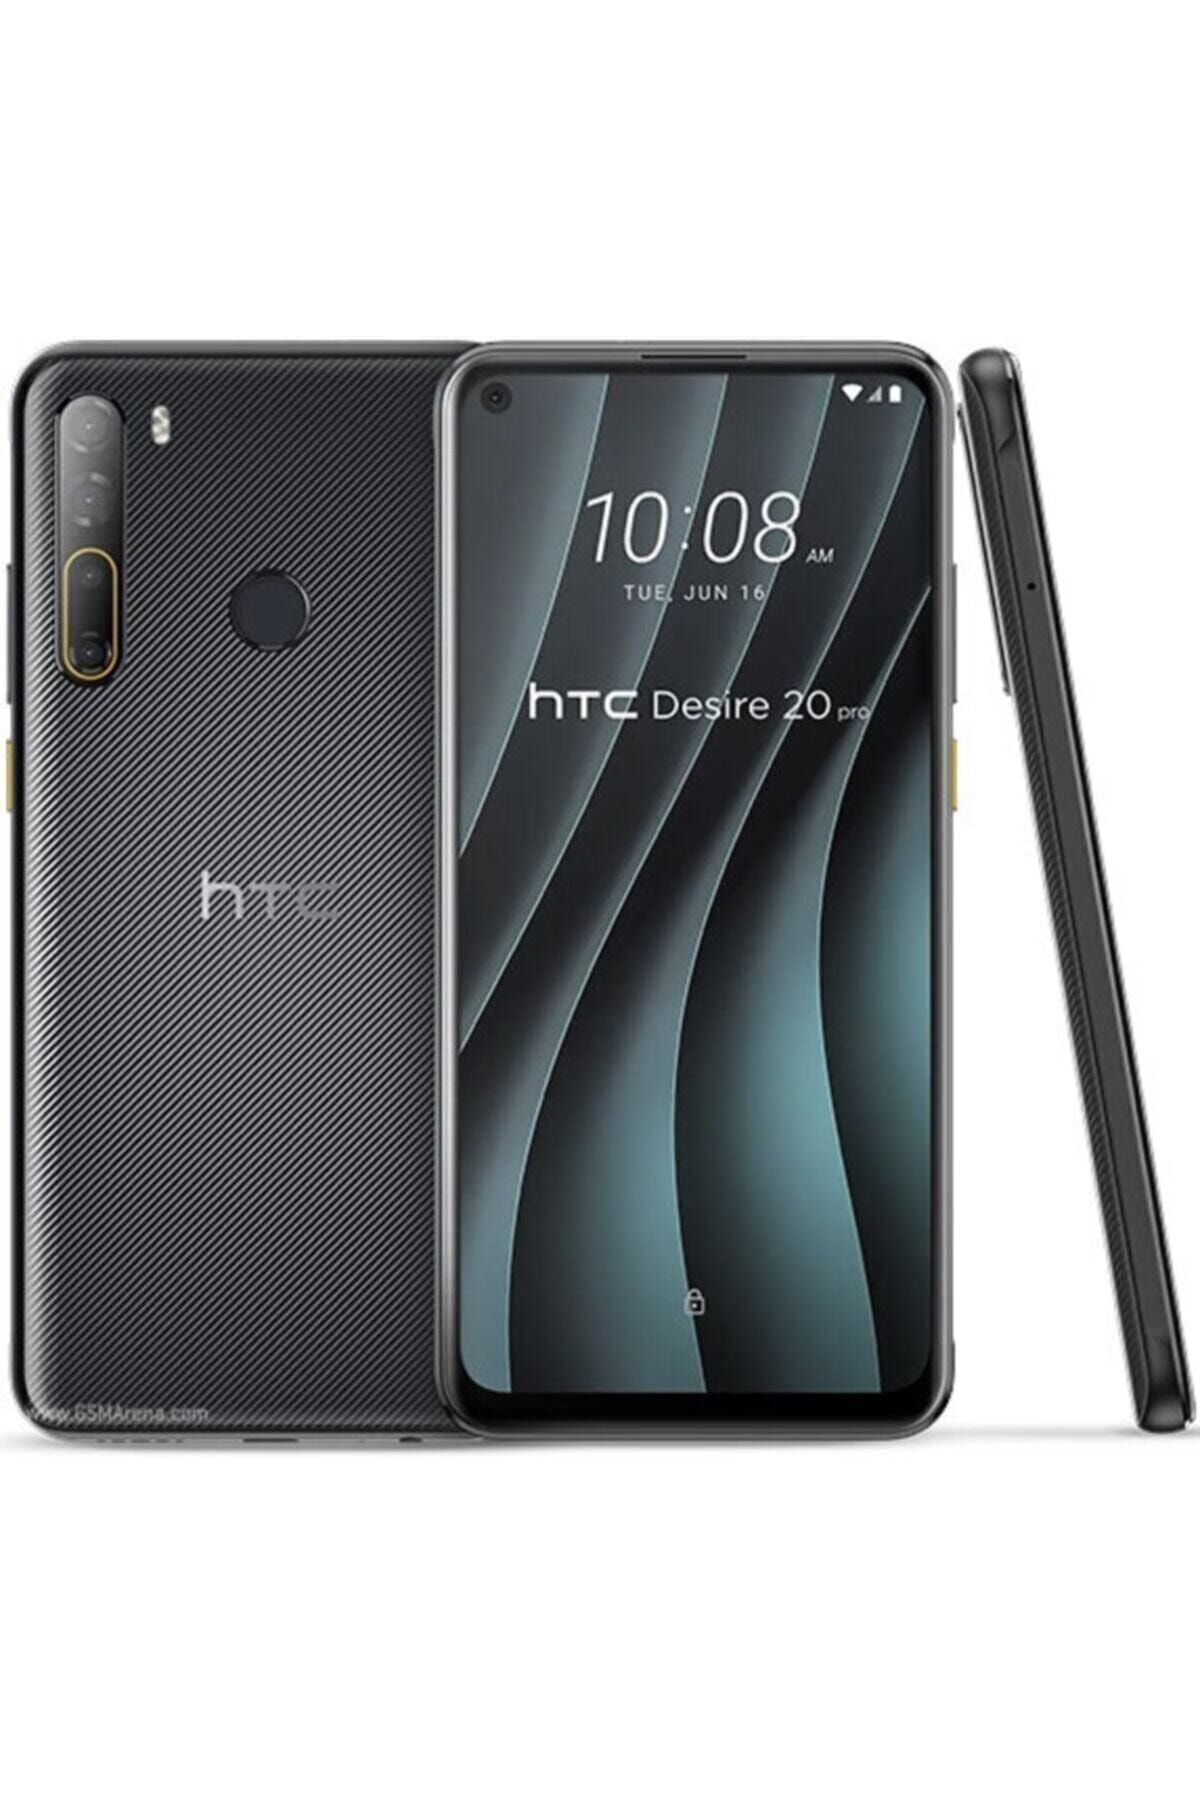 Htc Desire 20 Pro 128 GB Siyah Cep Telefonu (Resmi Distribütör Garantili) Desire20